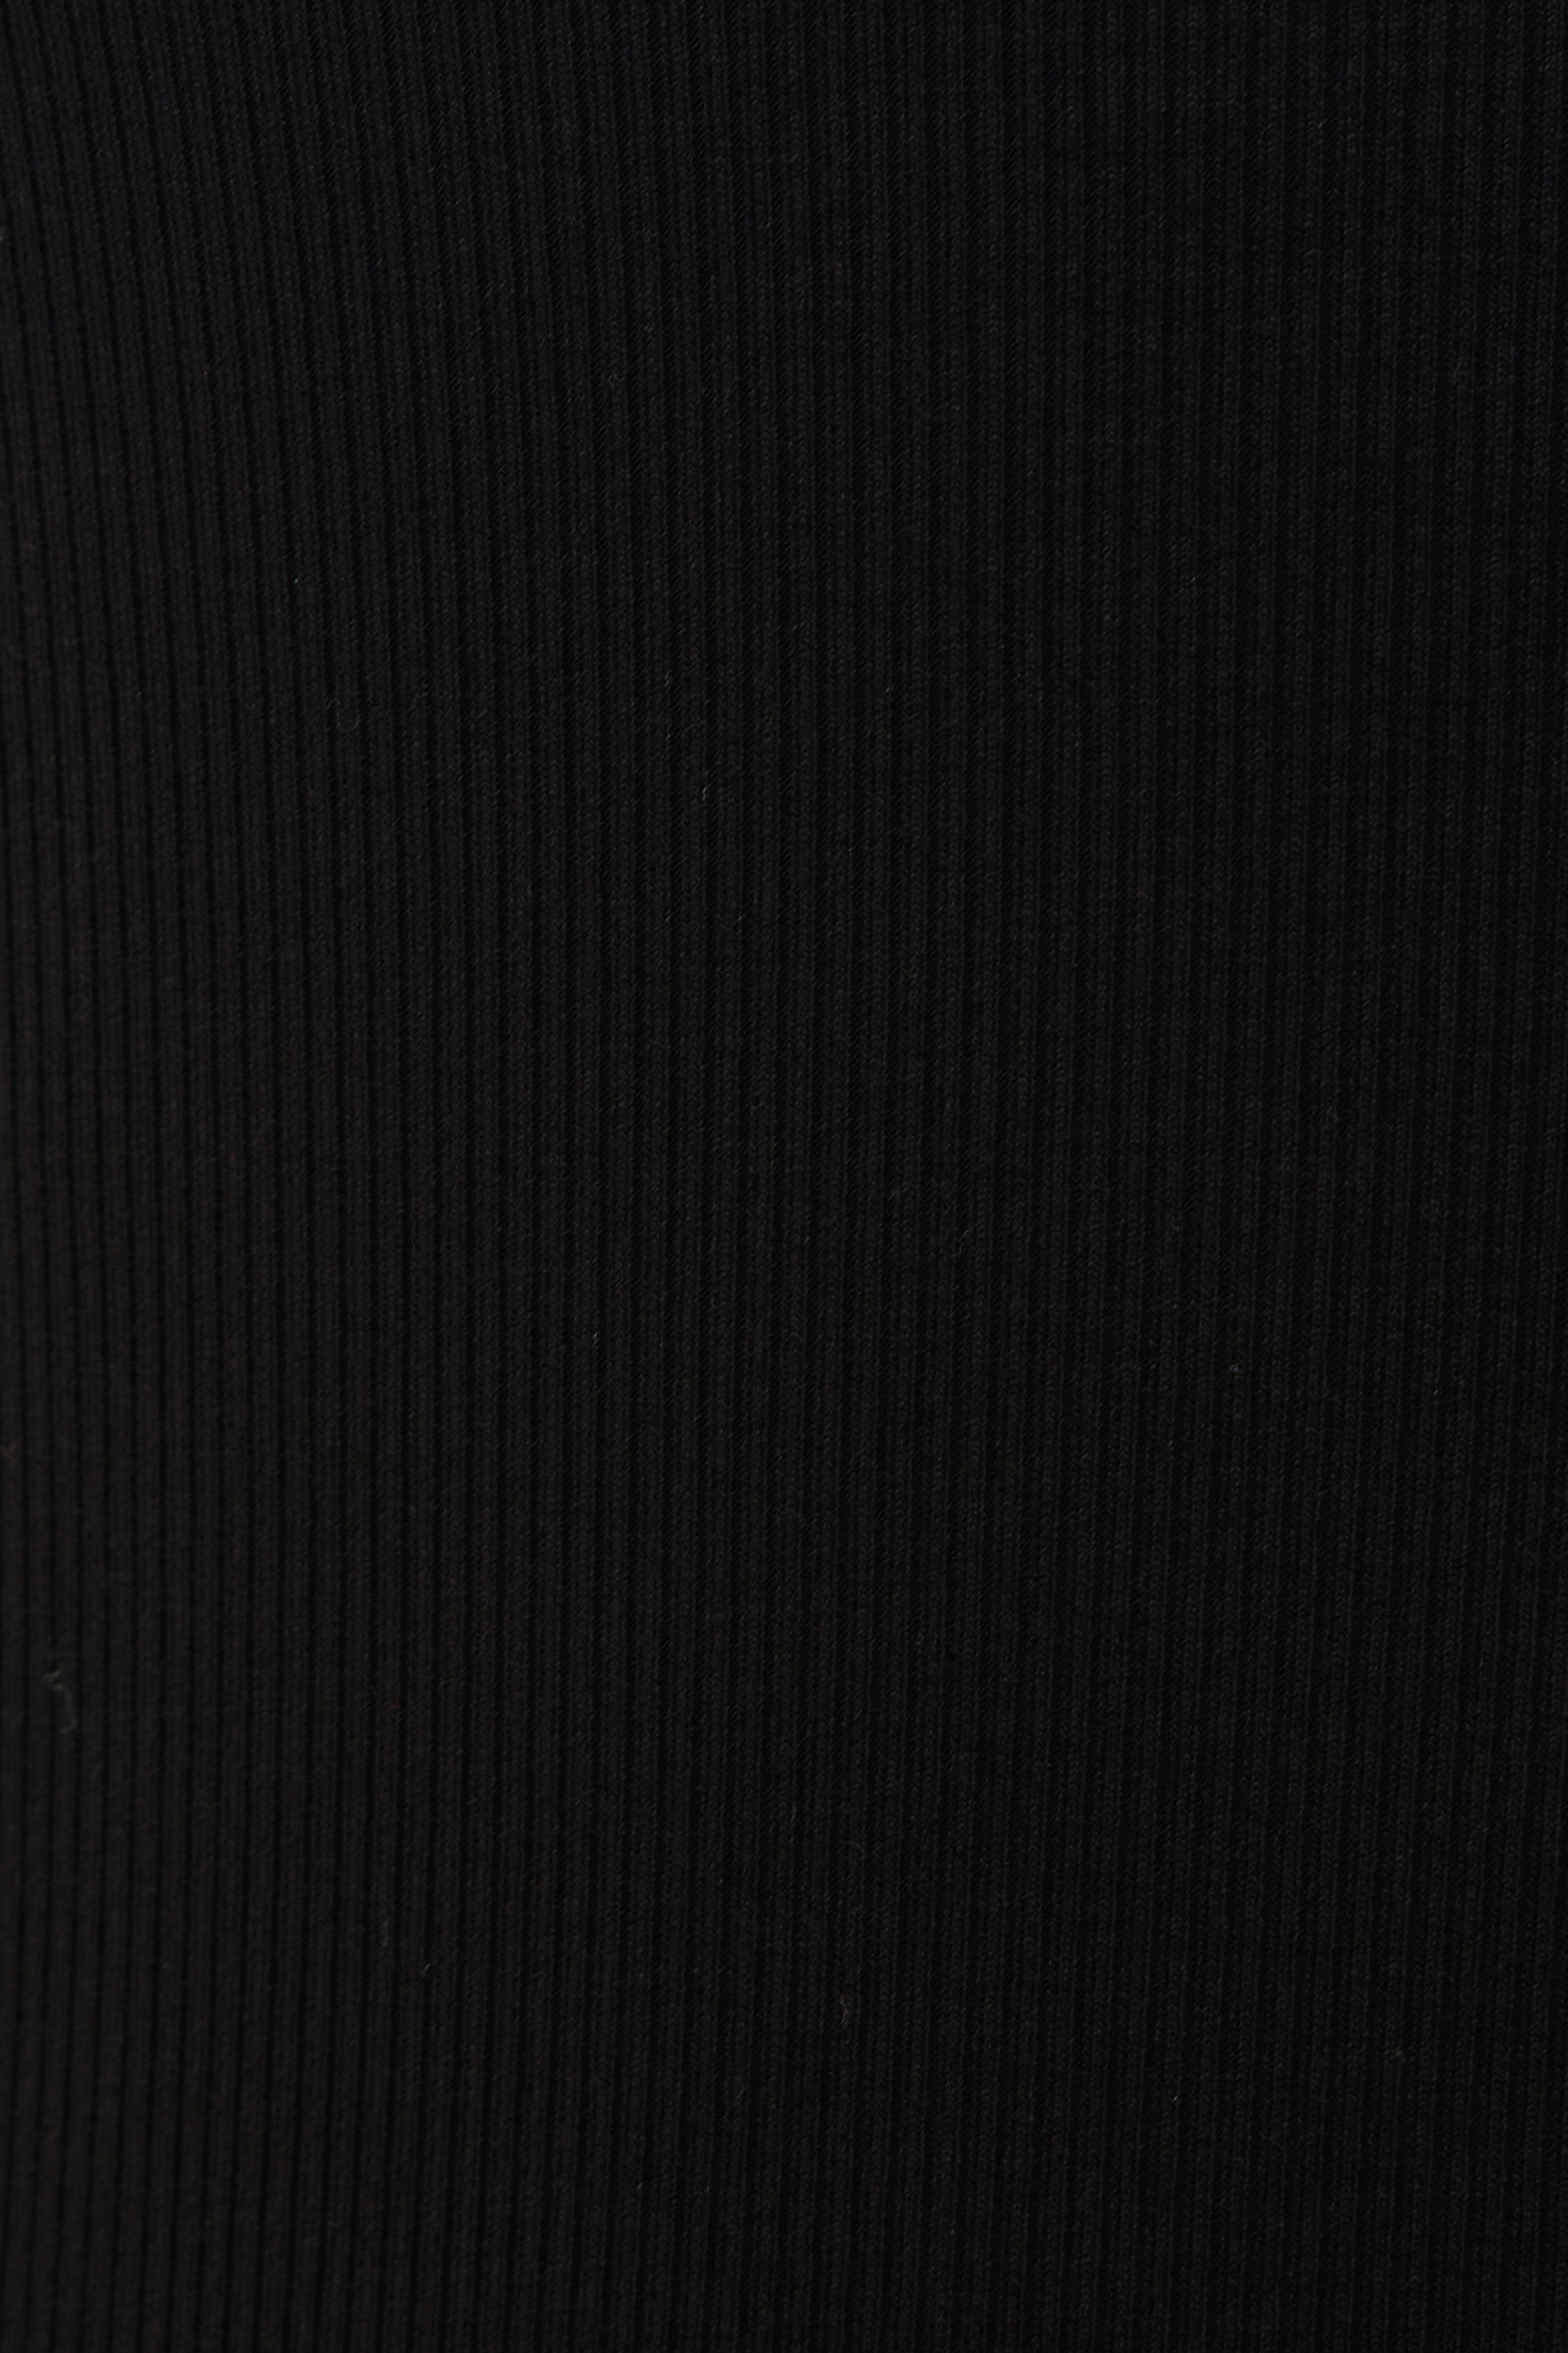 Knit Midi Dress with Slit in Black